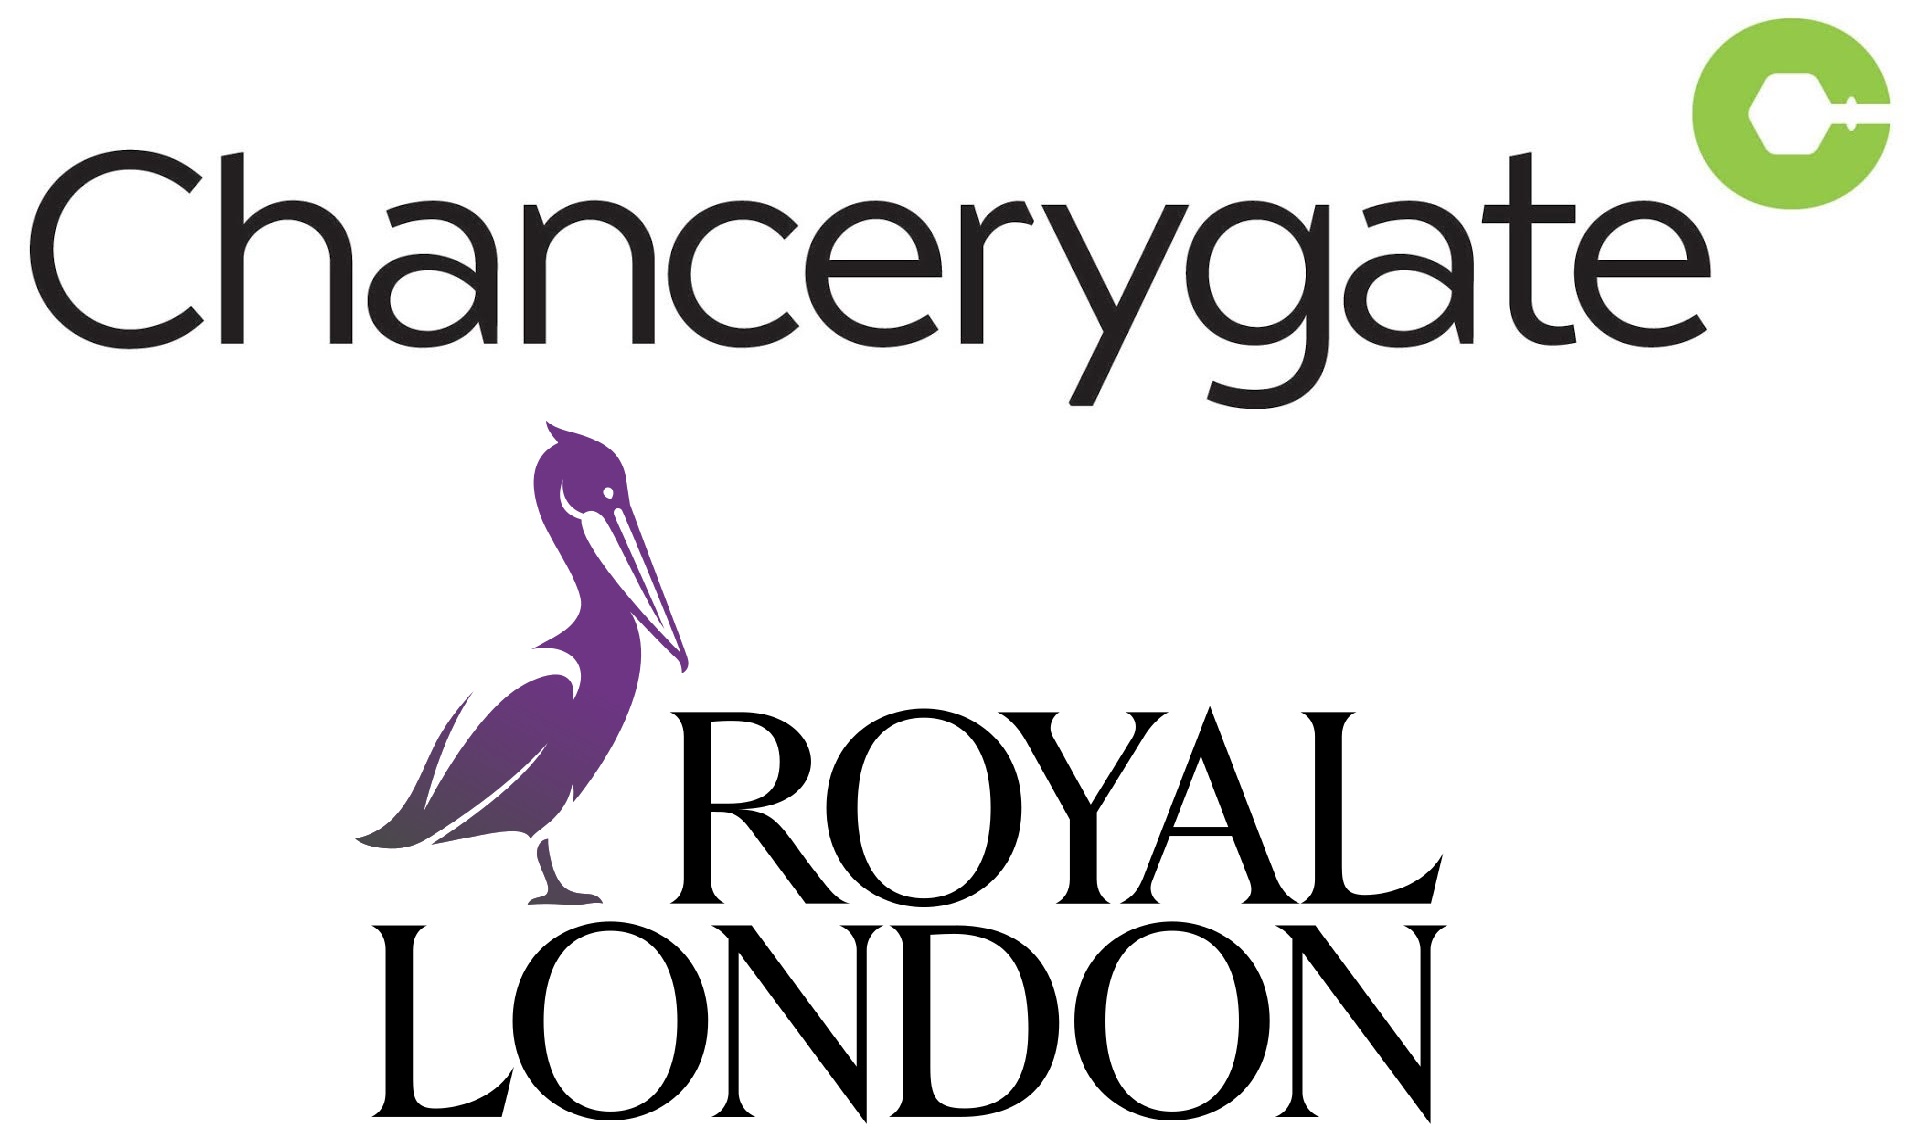 Royal London Mutual Insurance Society Ltd/Chancerygate